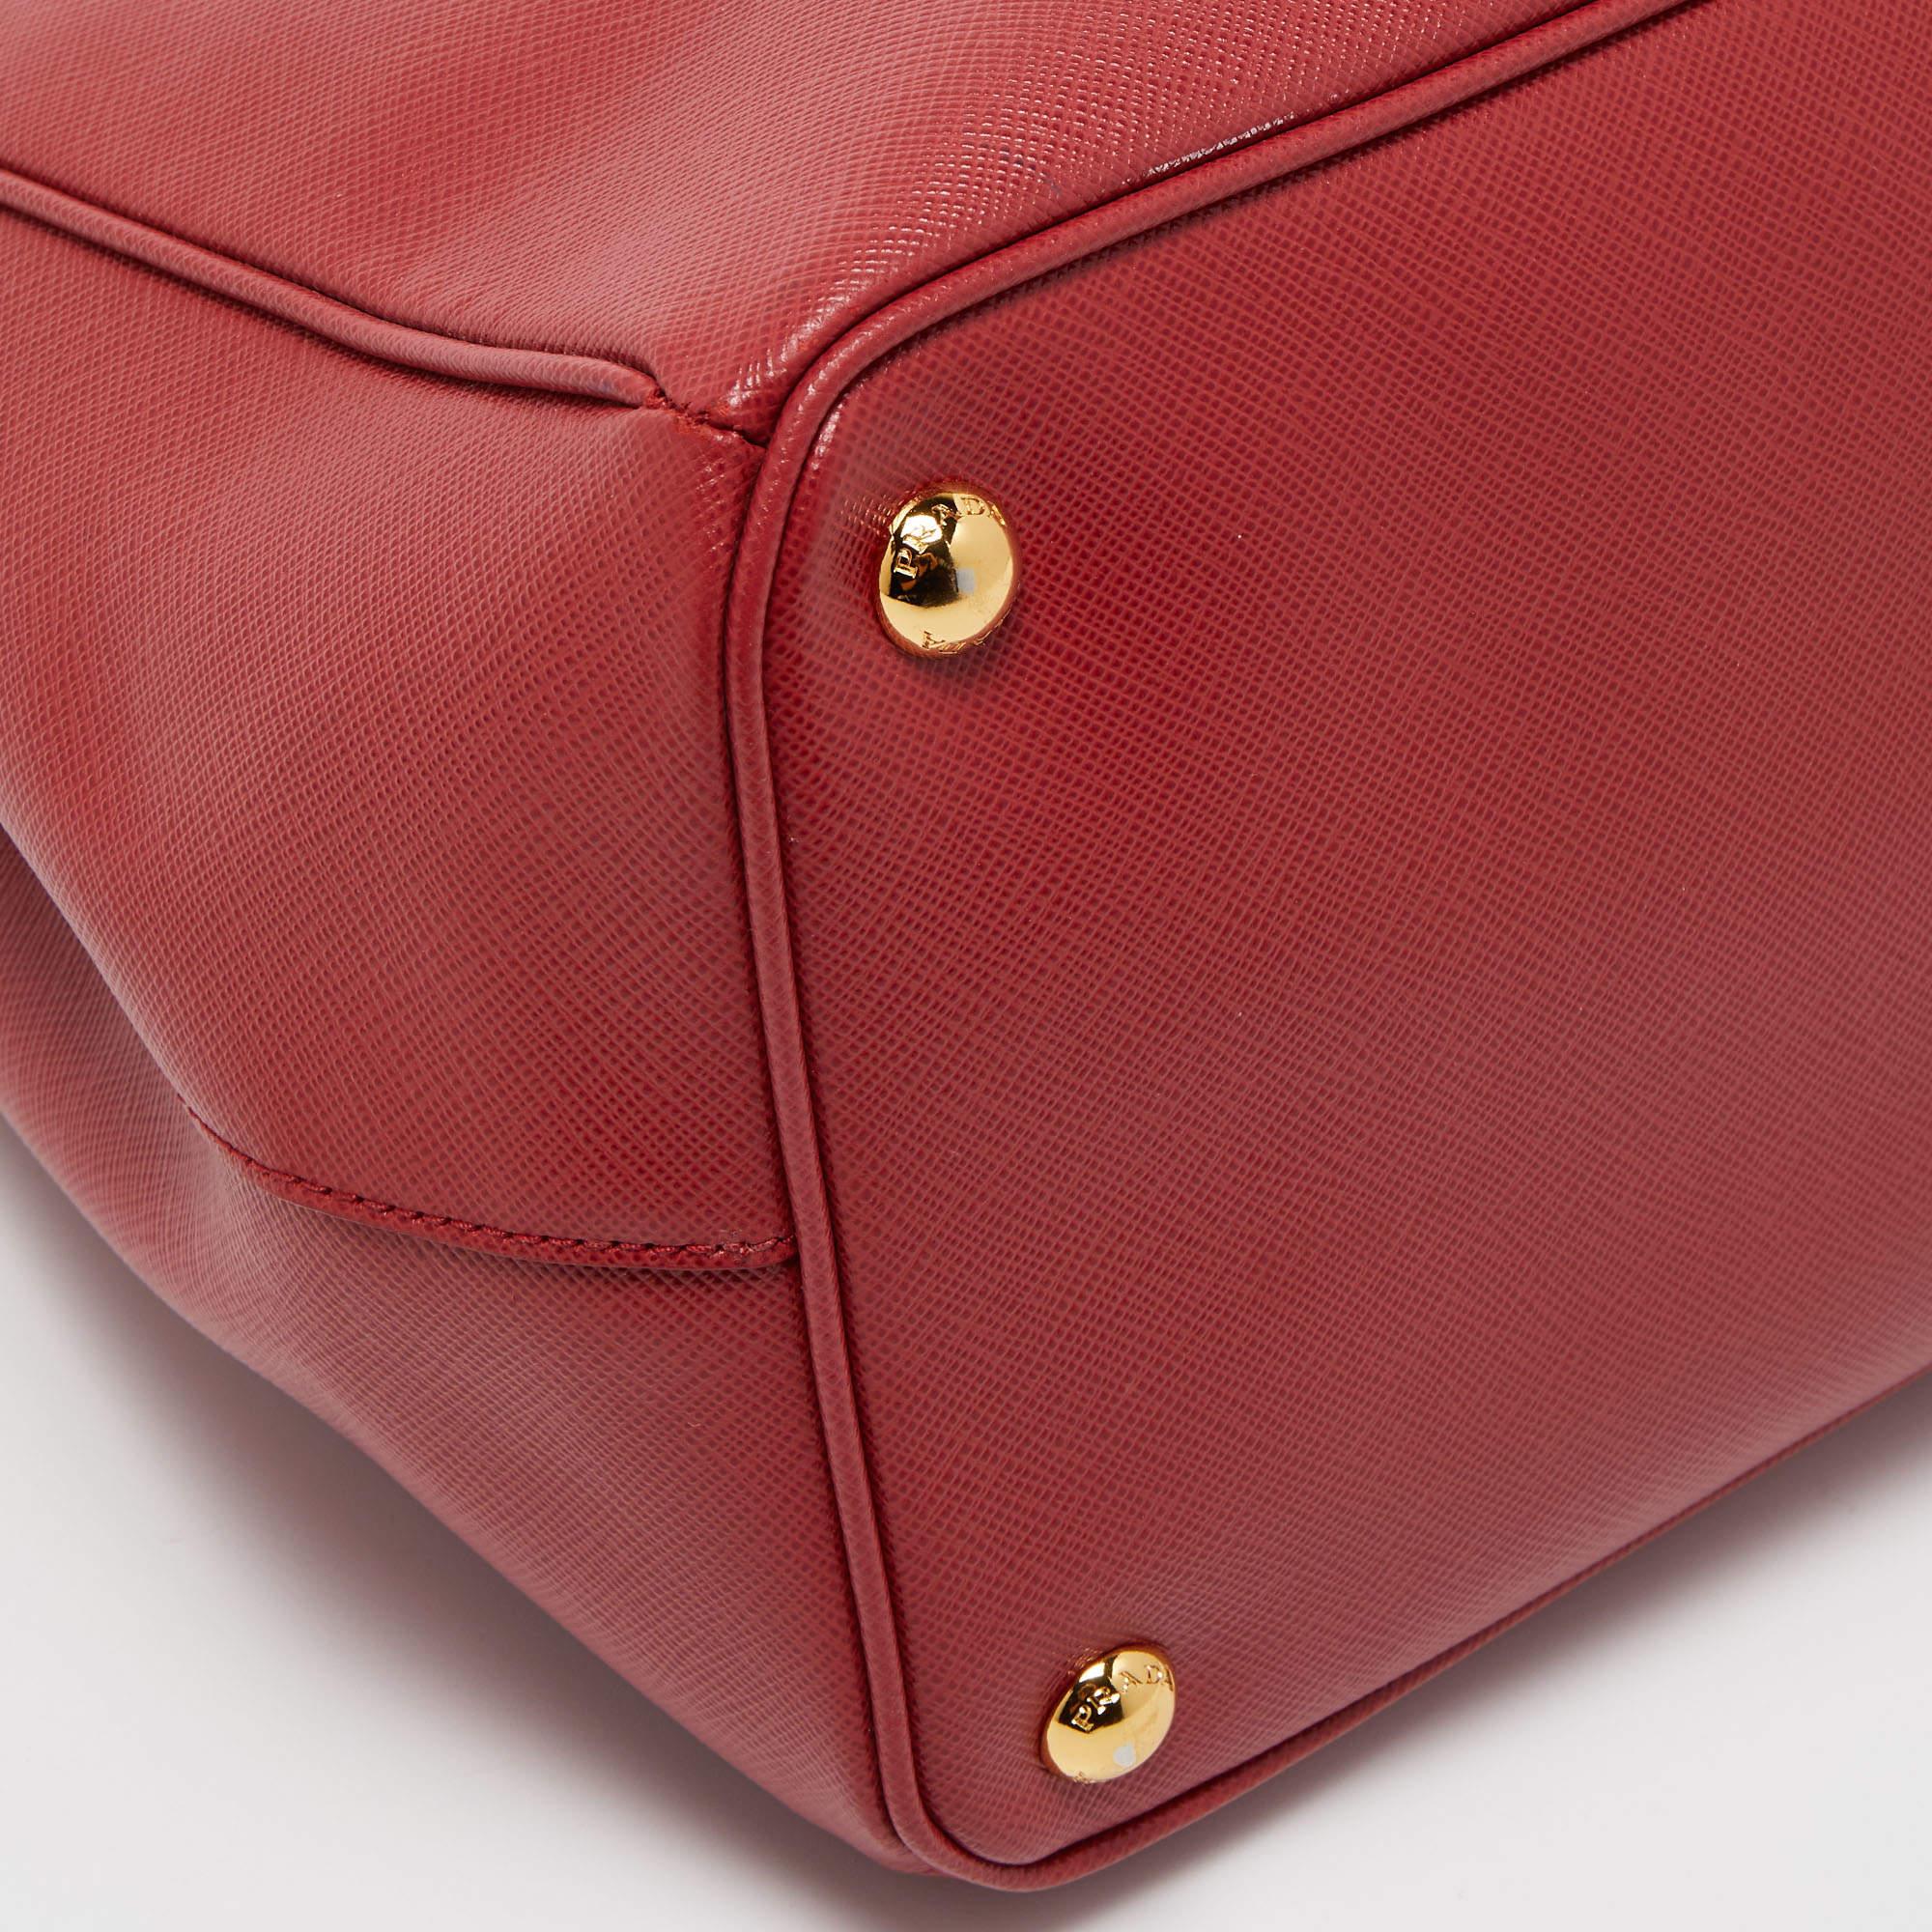 Prada Red Saffiano Leather Large Galleria Tote Bag 2